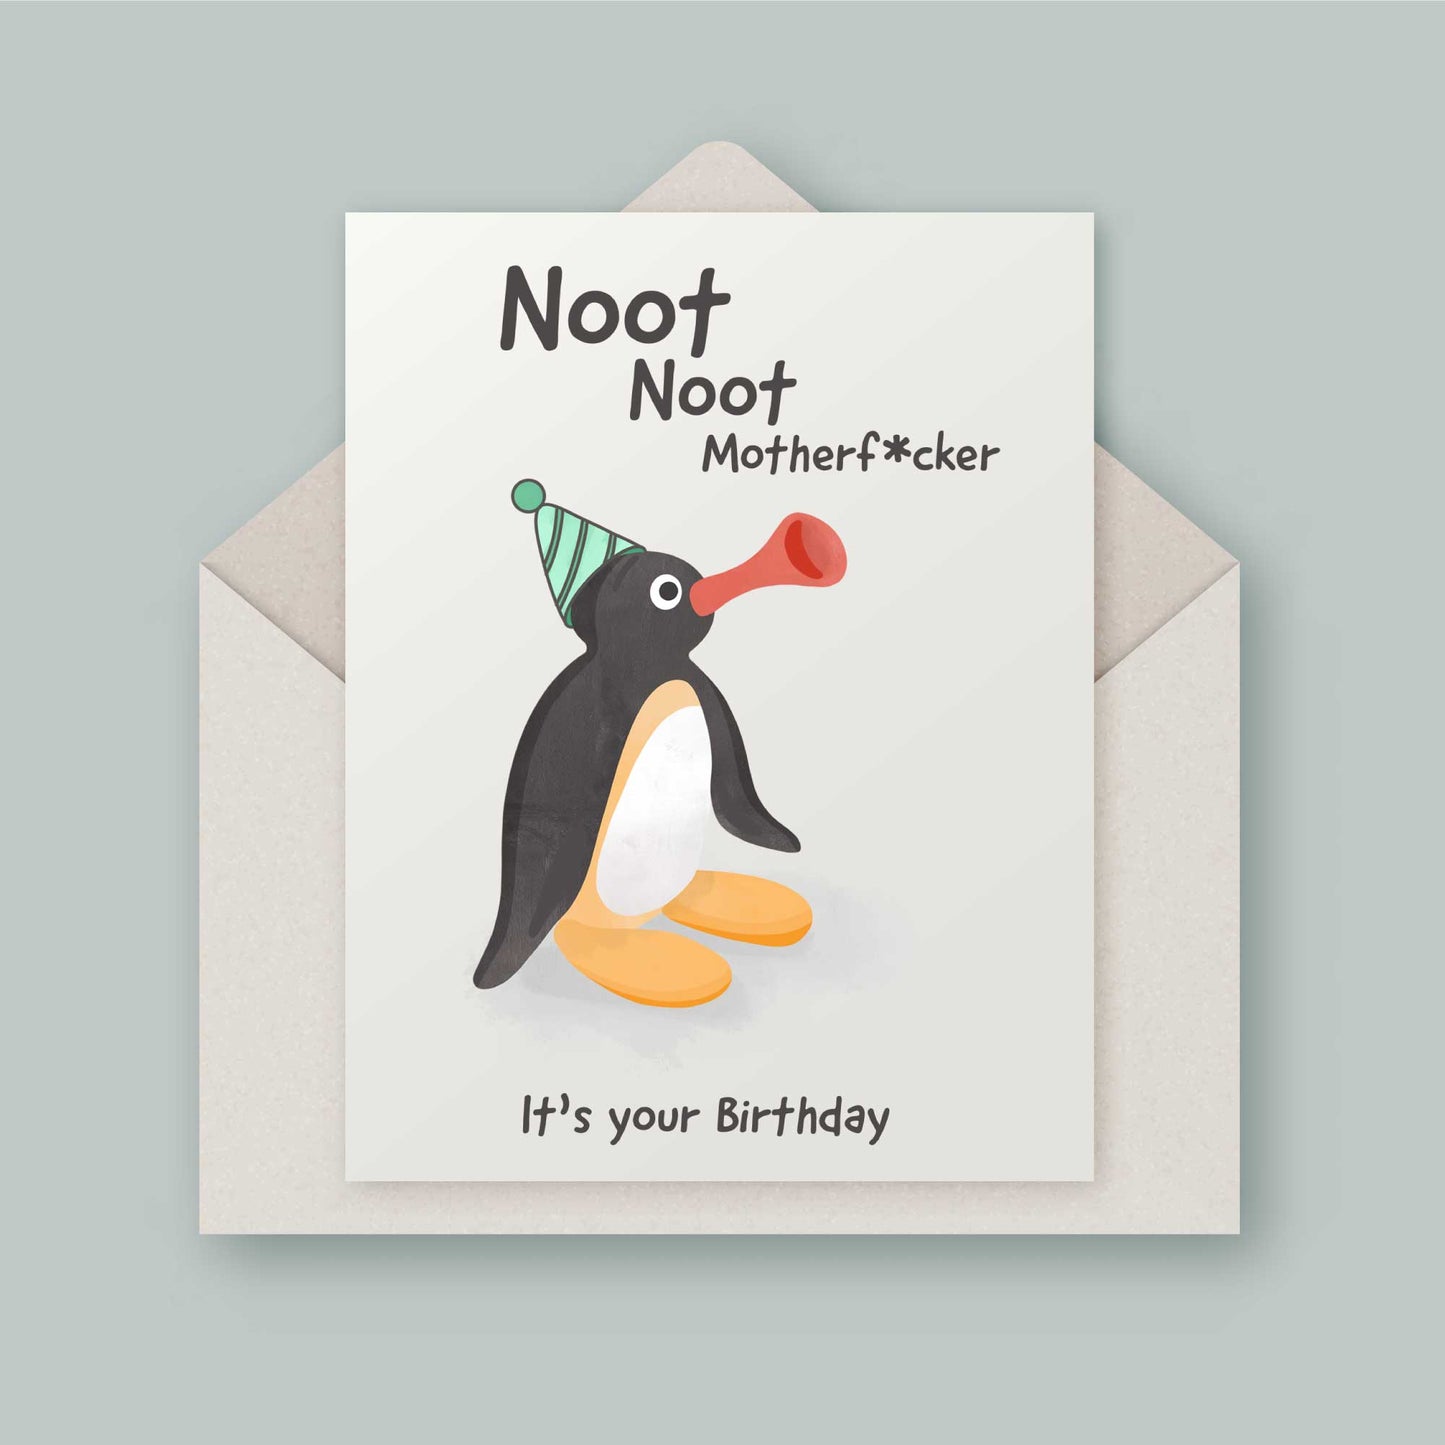 Nostalgic funny Pingu birthday card - Noot Noot it's your birthday